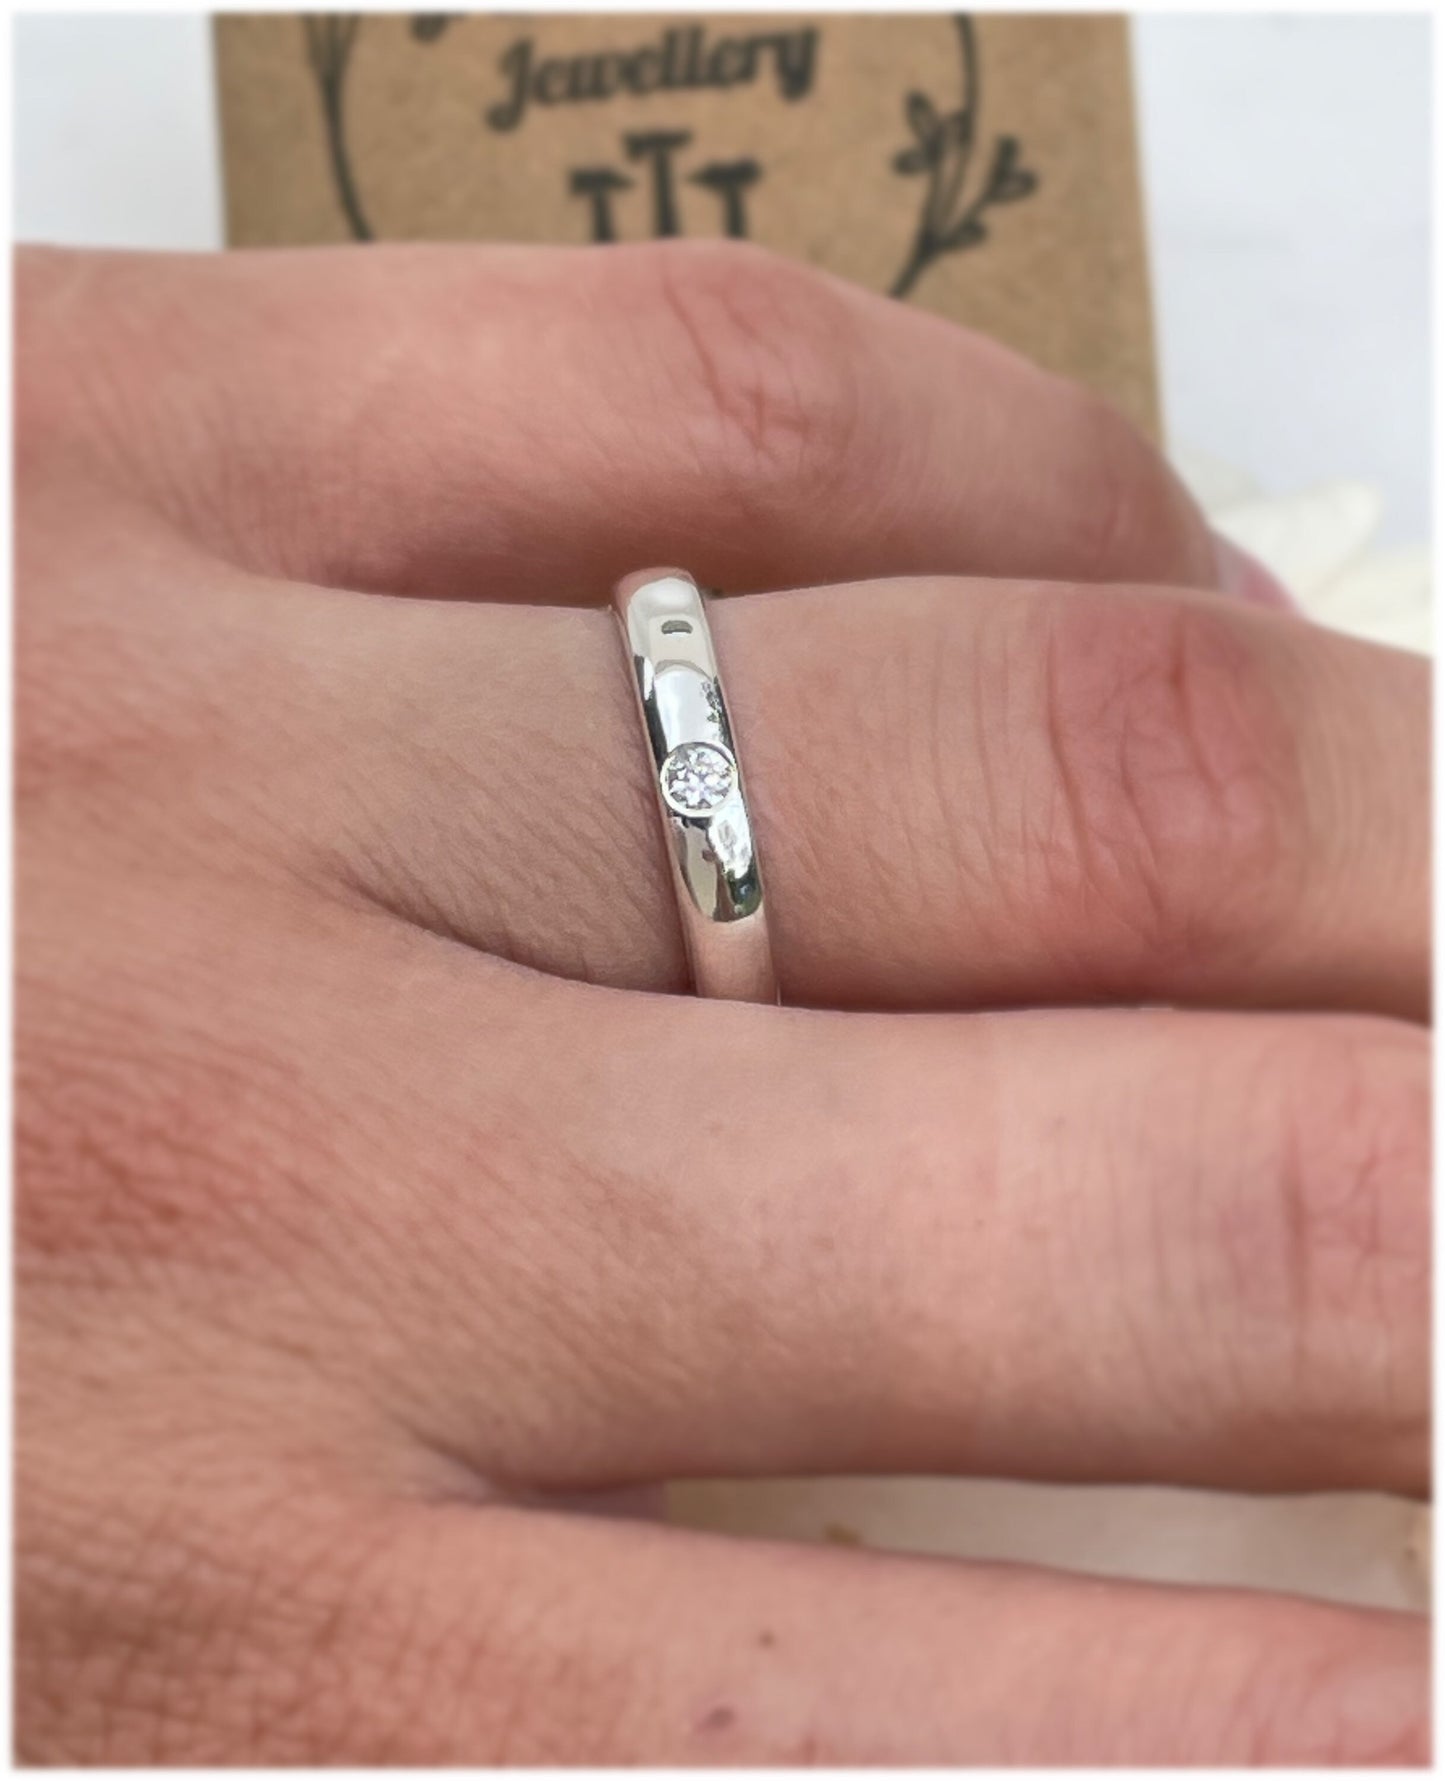 Flush set diamond engagement/ wedding ring